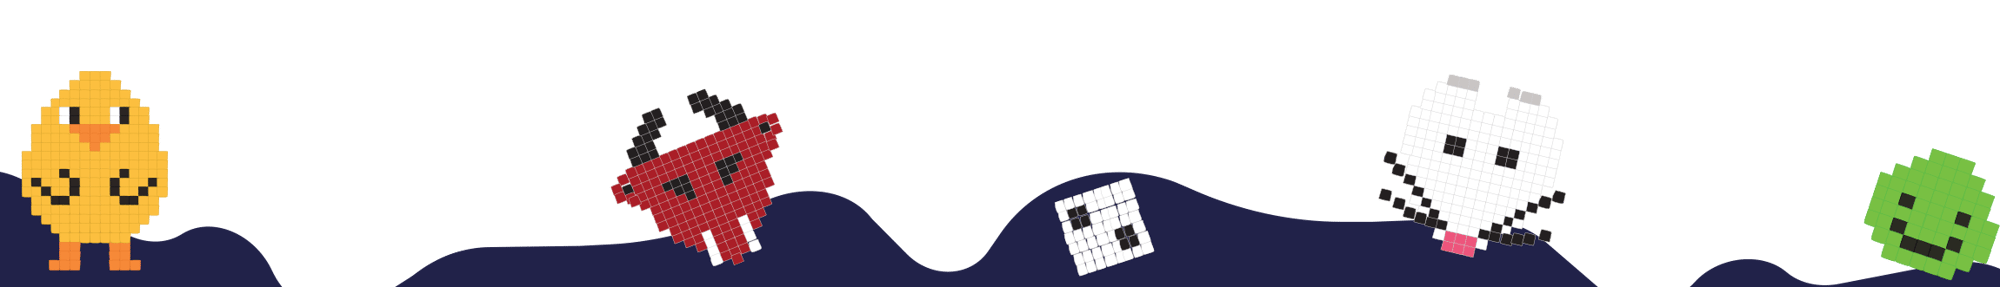 pixel art_bunn_landing_page